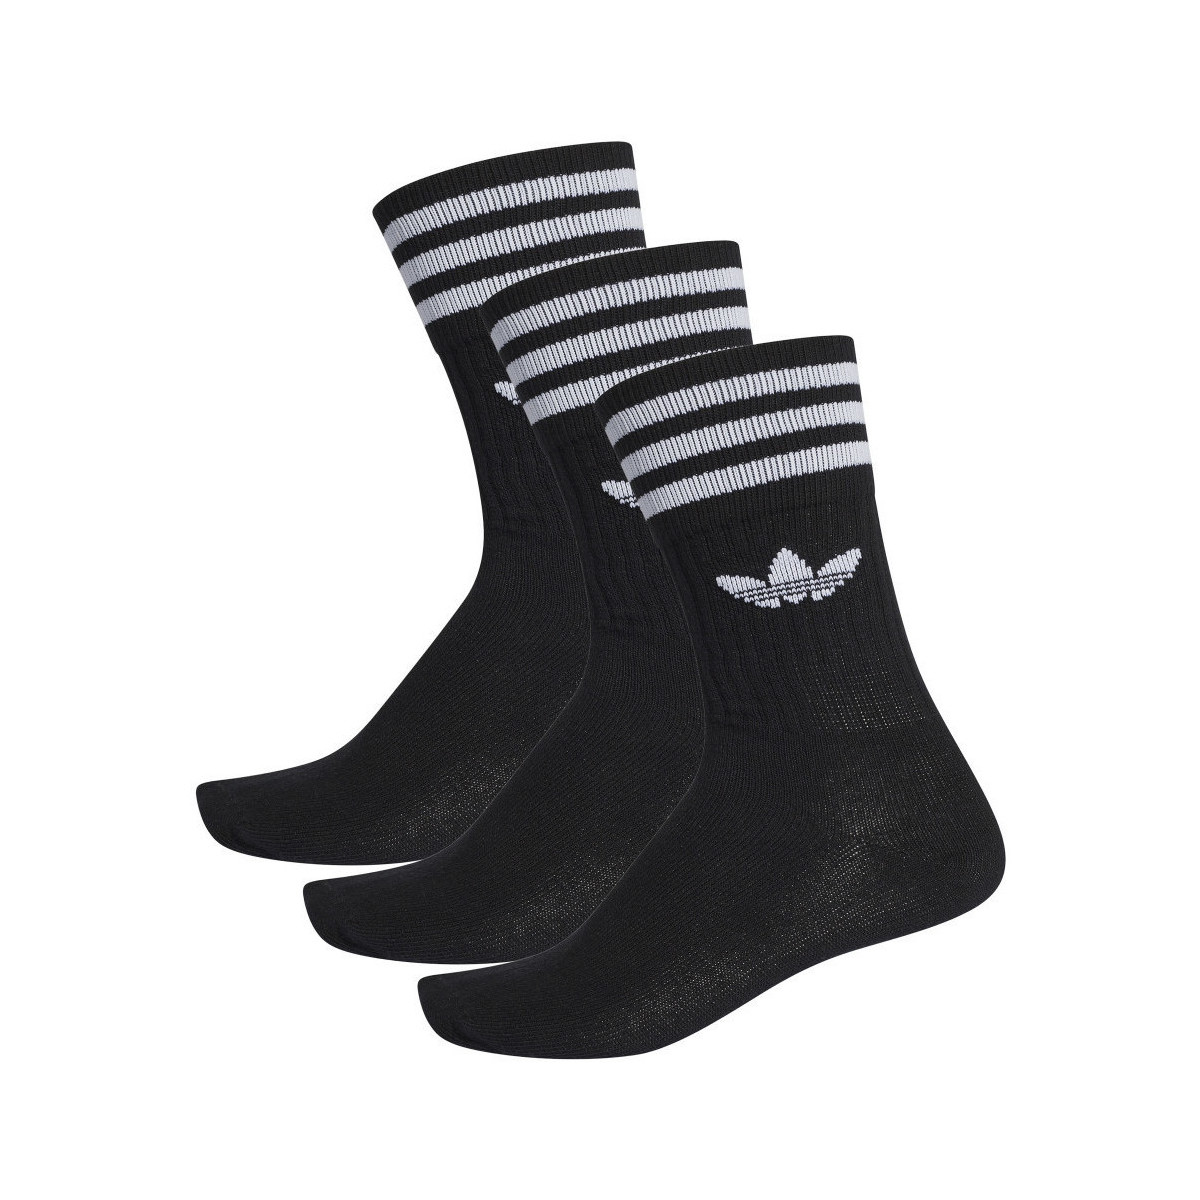 Spodnje perilo Nogavice adidas Originals Solid crew sock Črna